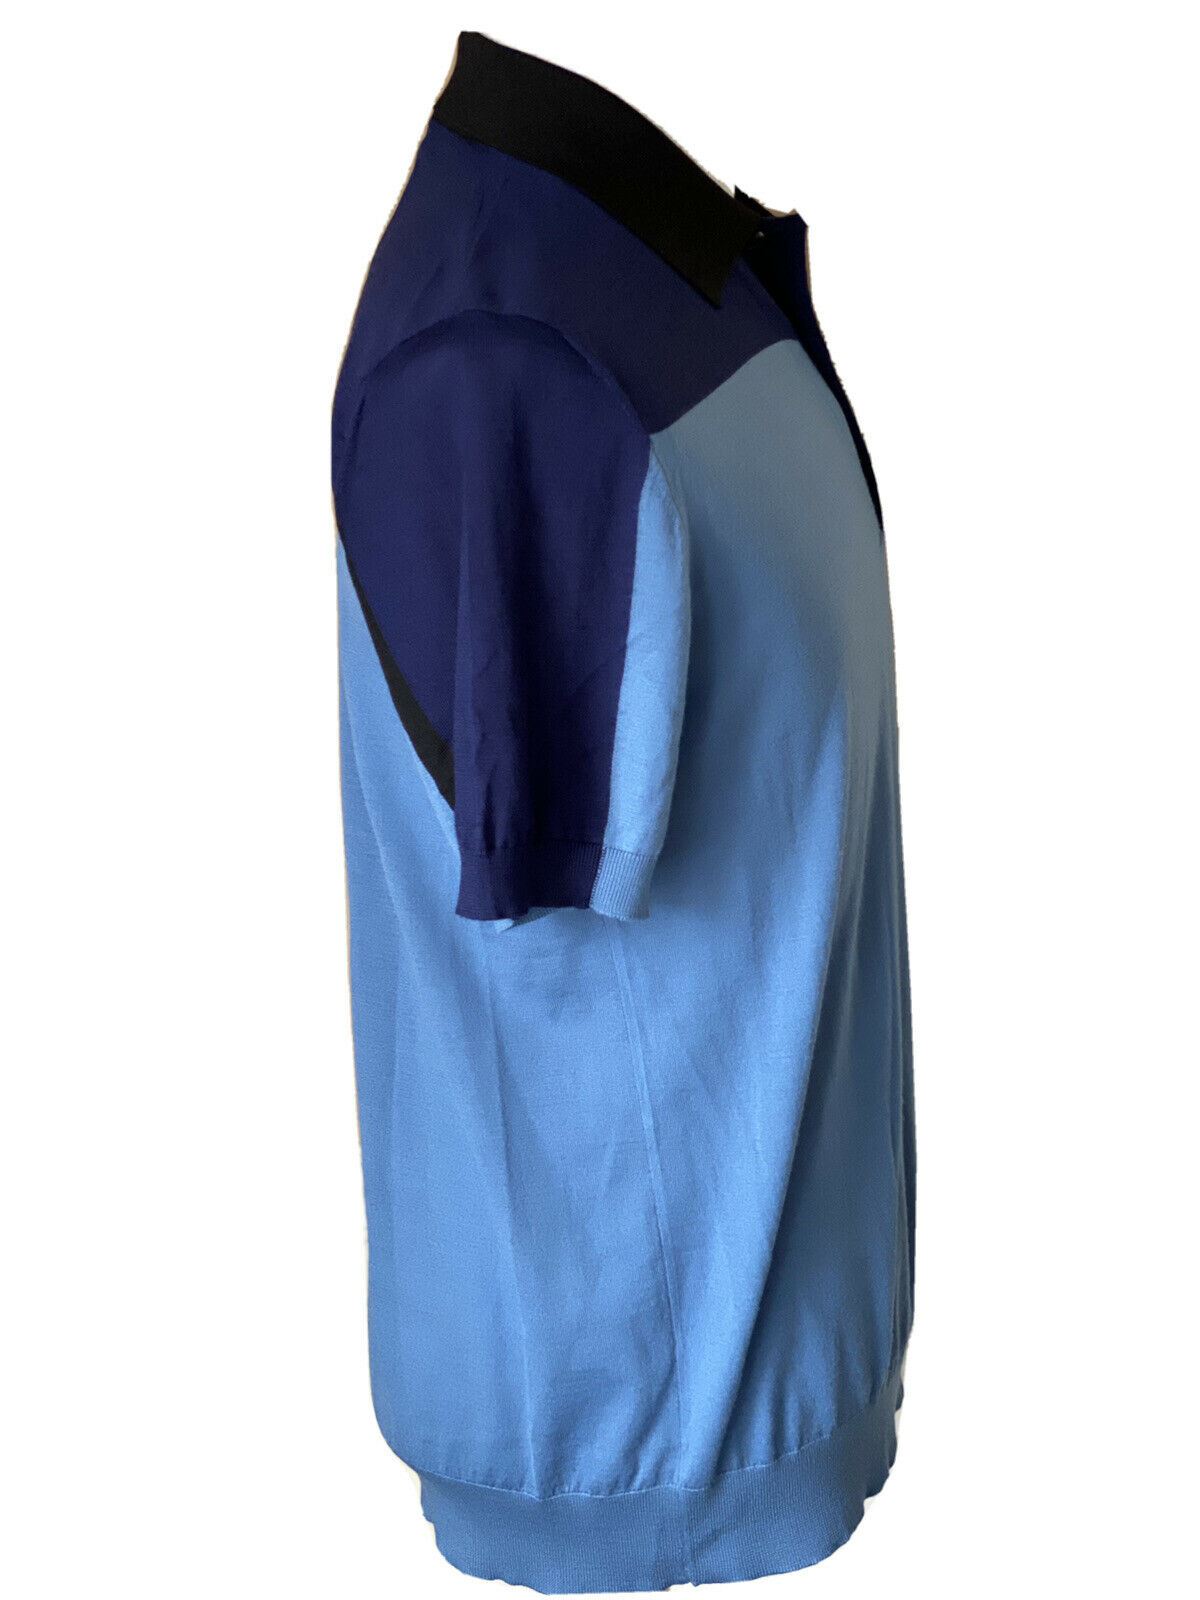 NWT $980 Prada Short Sleeve Wool Blue Polo Shirt UMA950 Made in Italy